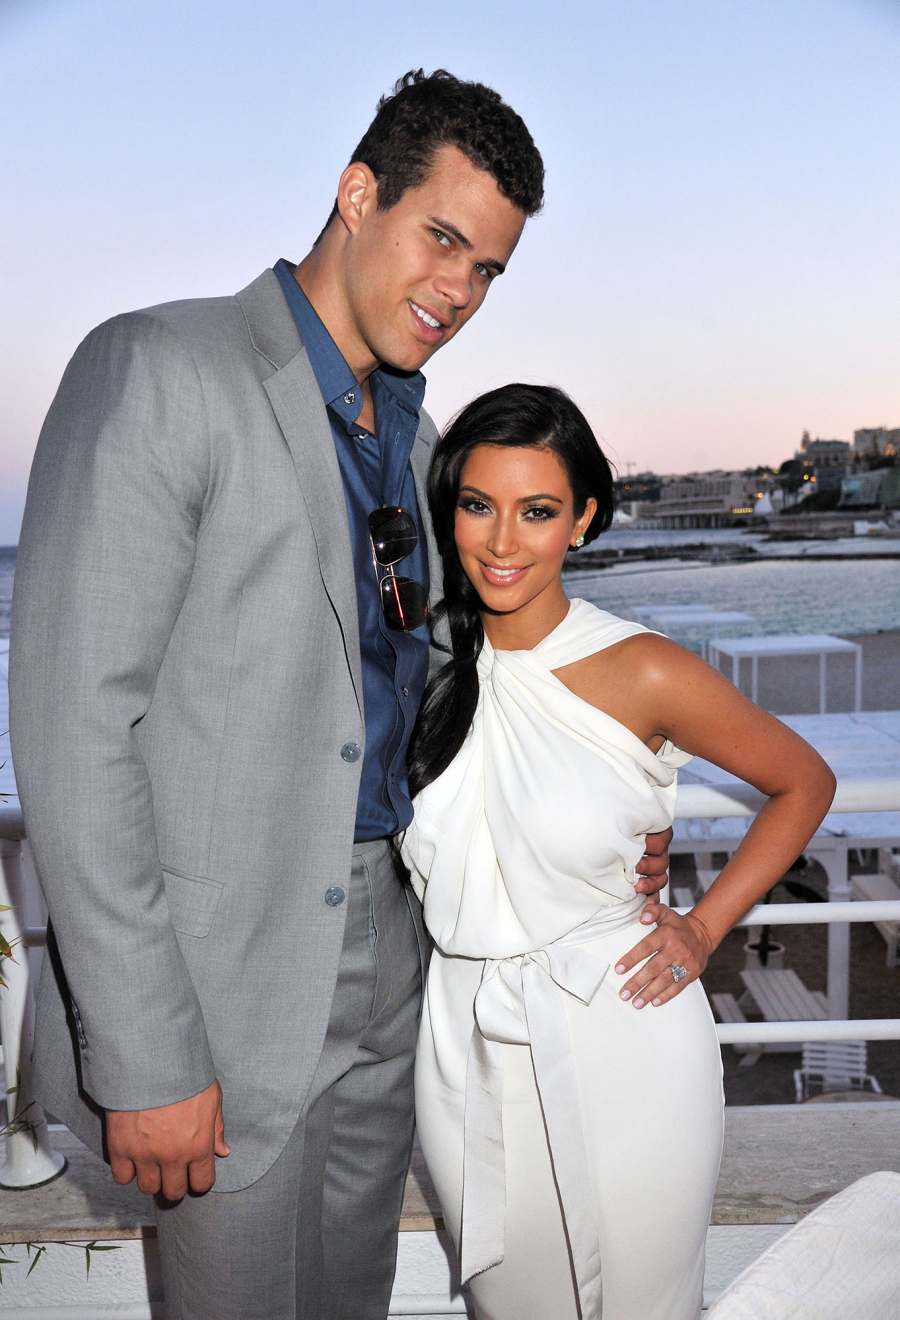 08 Kim Kardashian Pressured to Marry Kris Humphries KUWTK Reunion Revelations